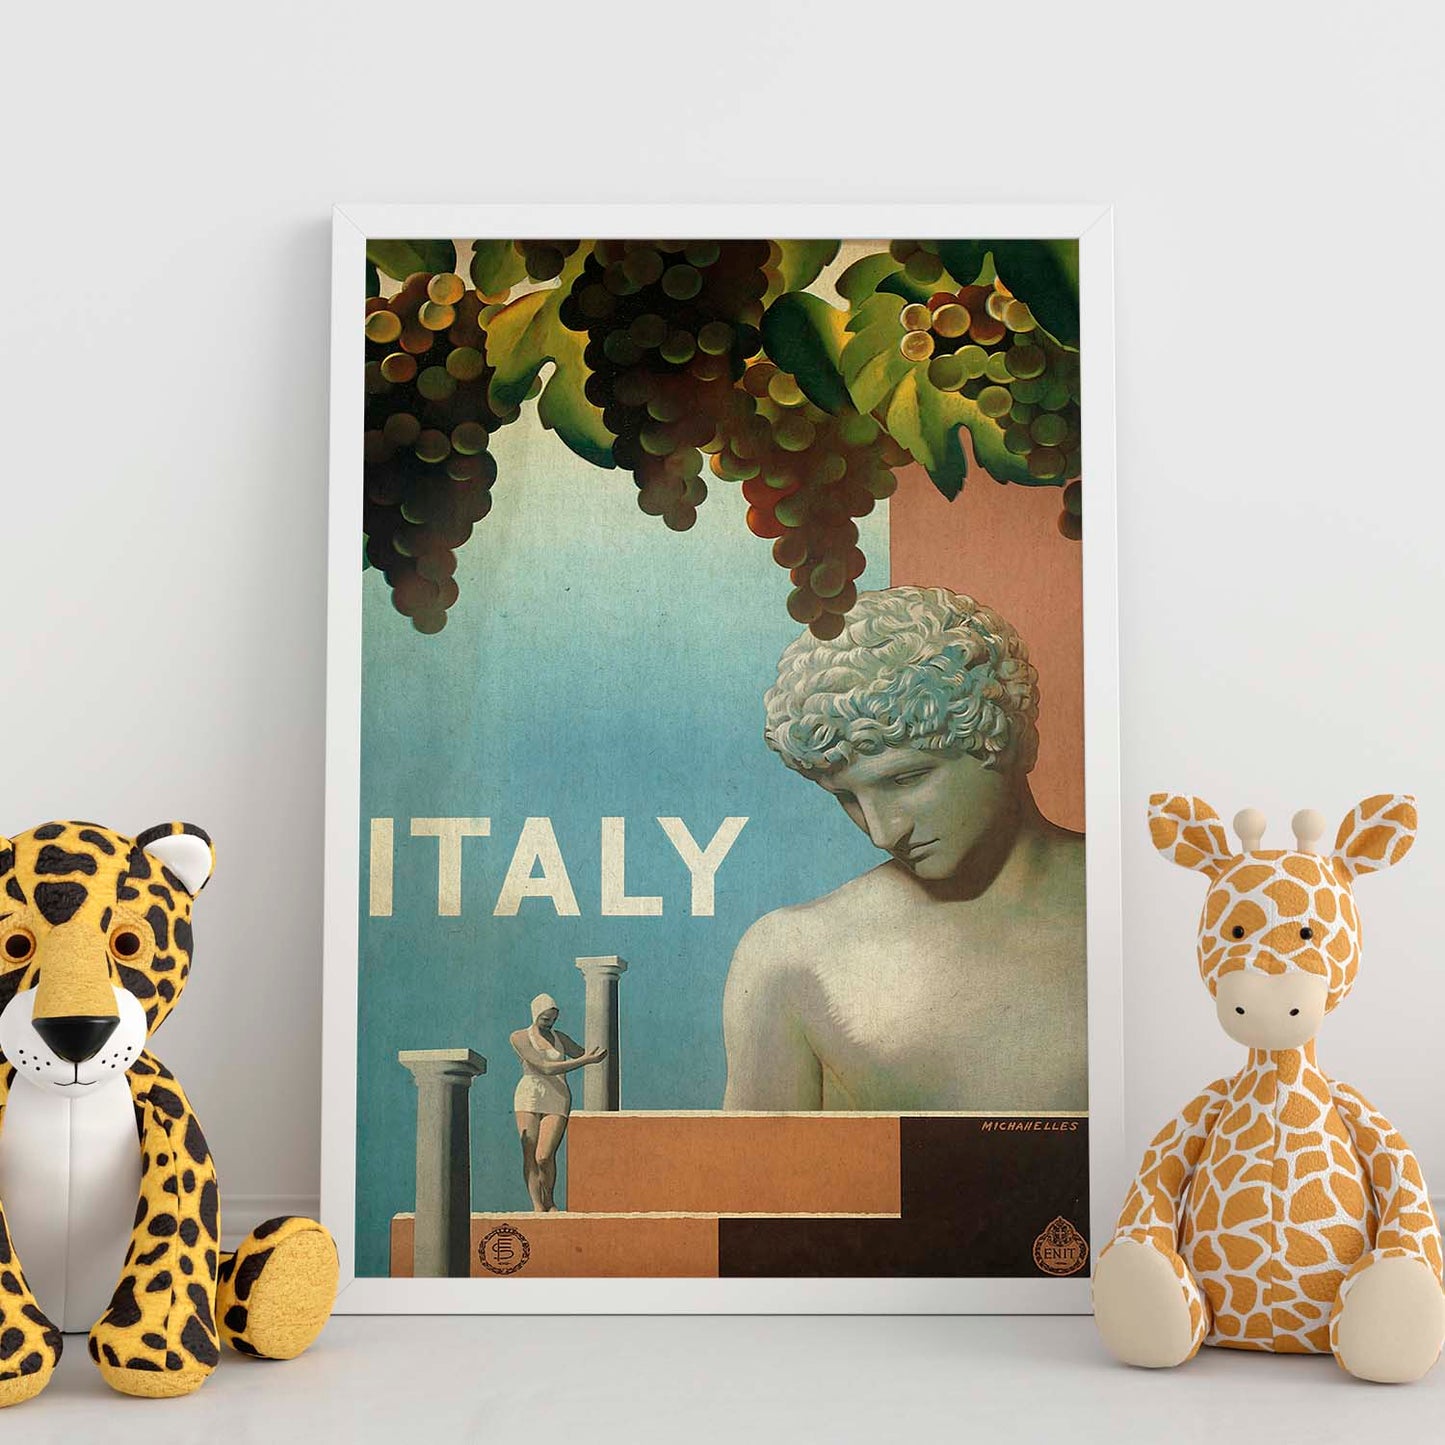 Poster vintage. Cartel vintage de Francia e Italia. Viaja a Italia.-Artwork-Nacnic-Nacnic Estudio SL